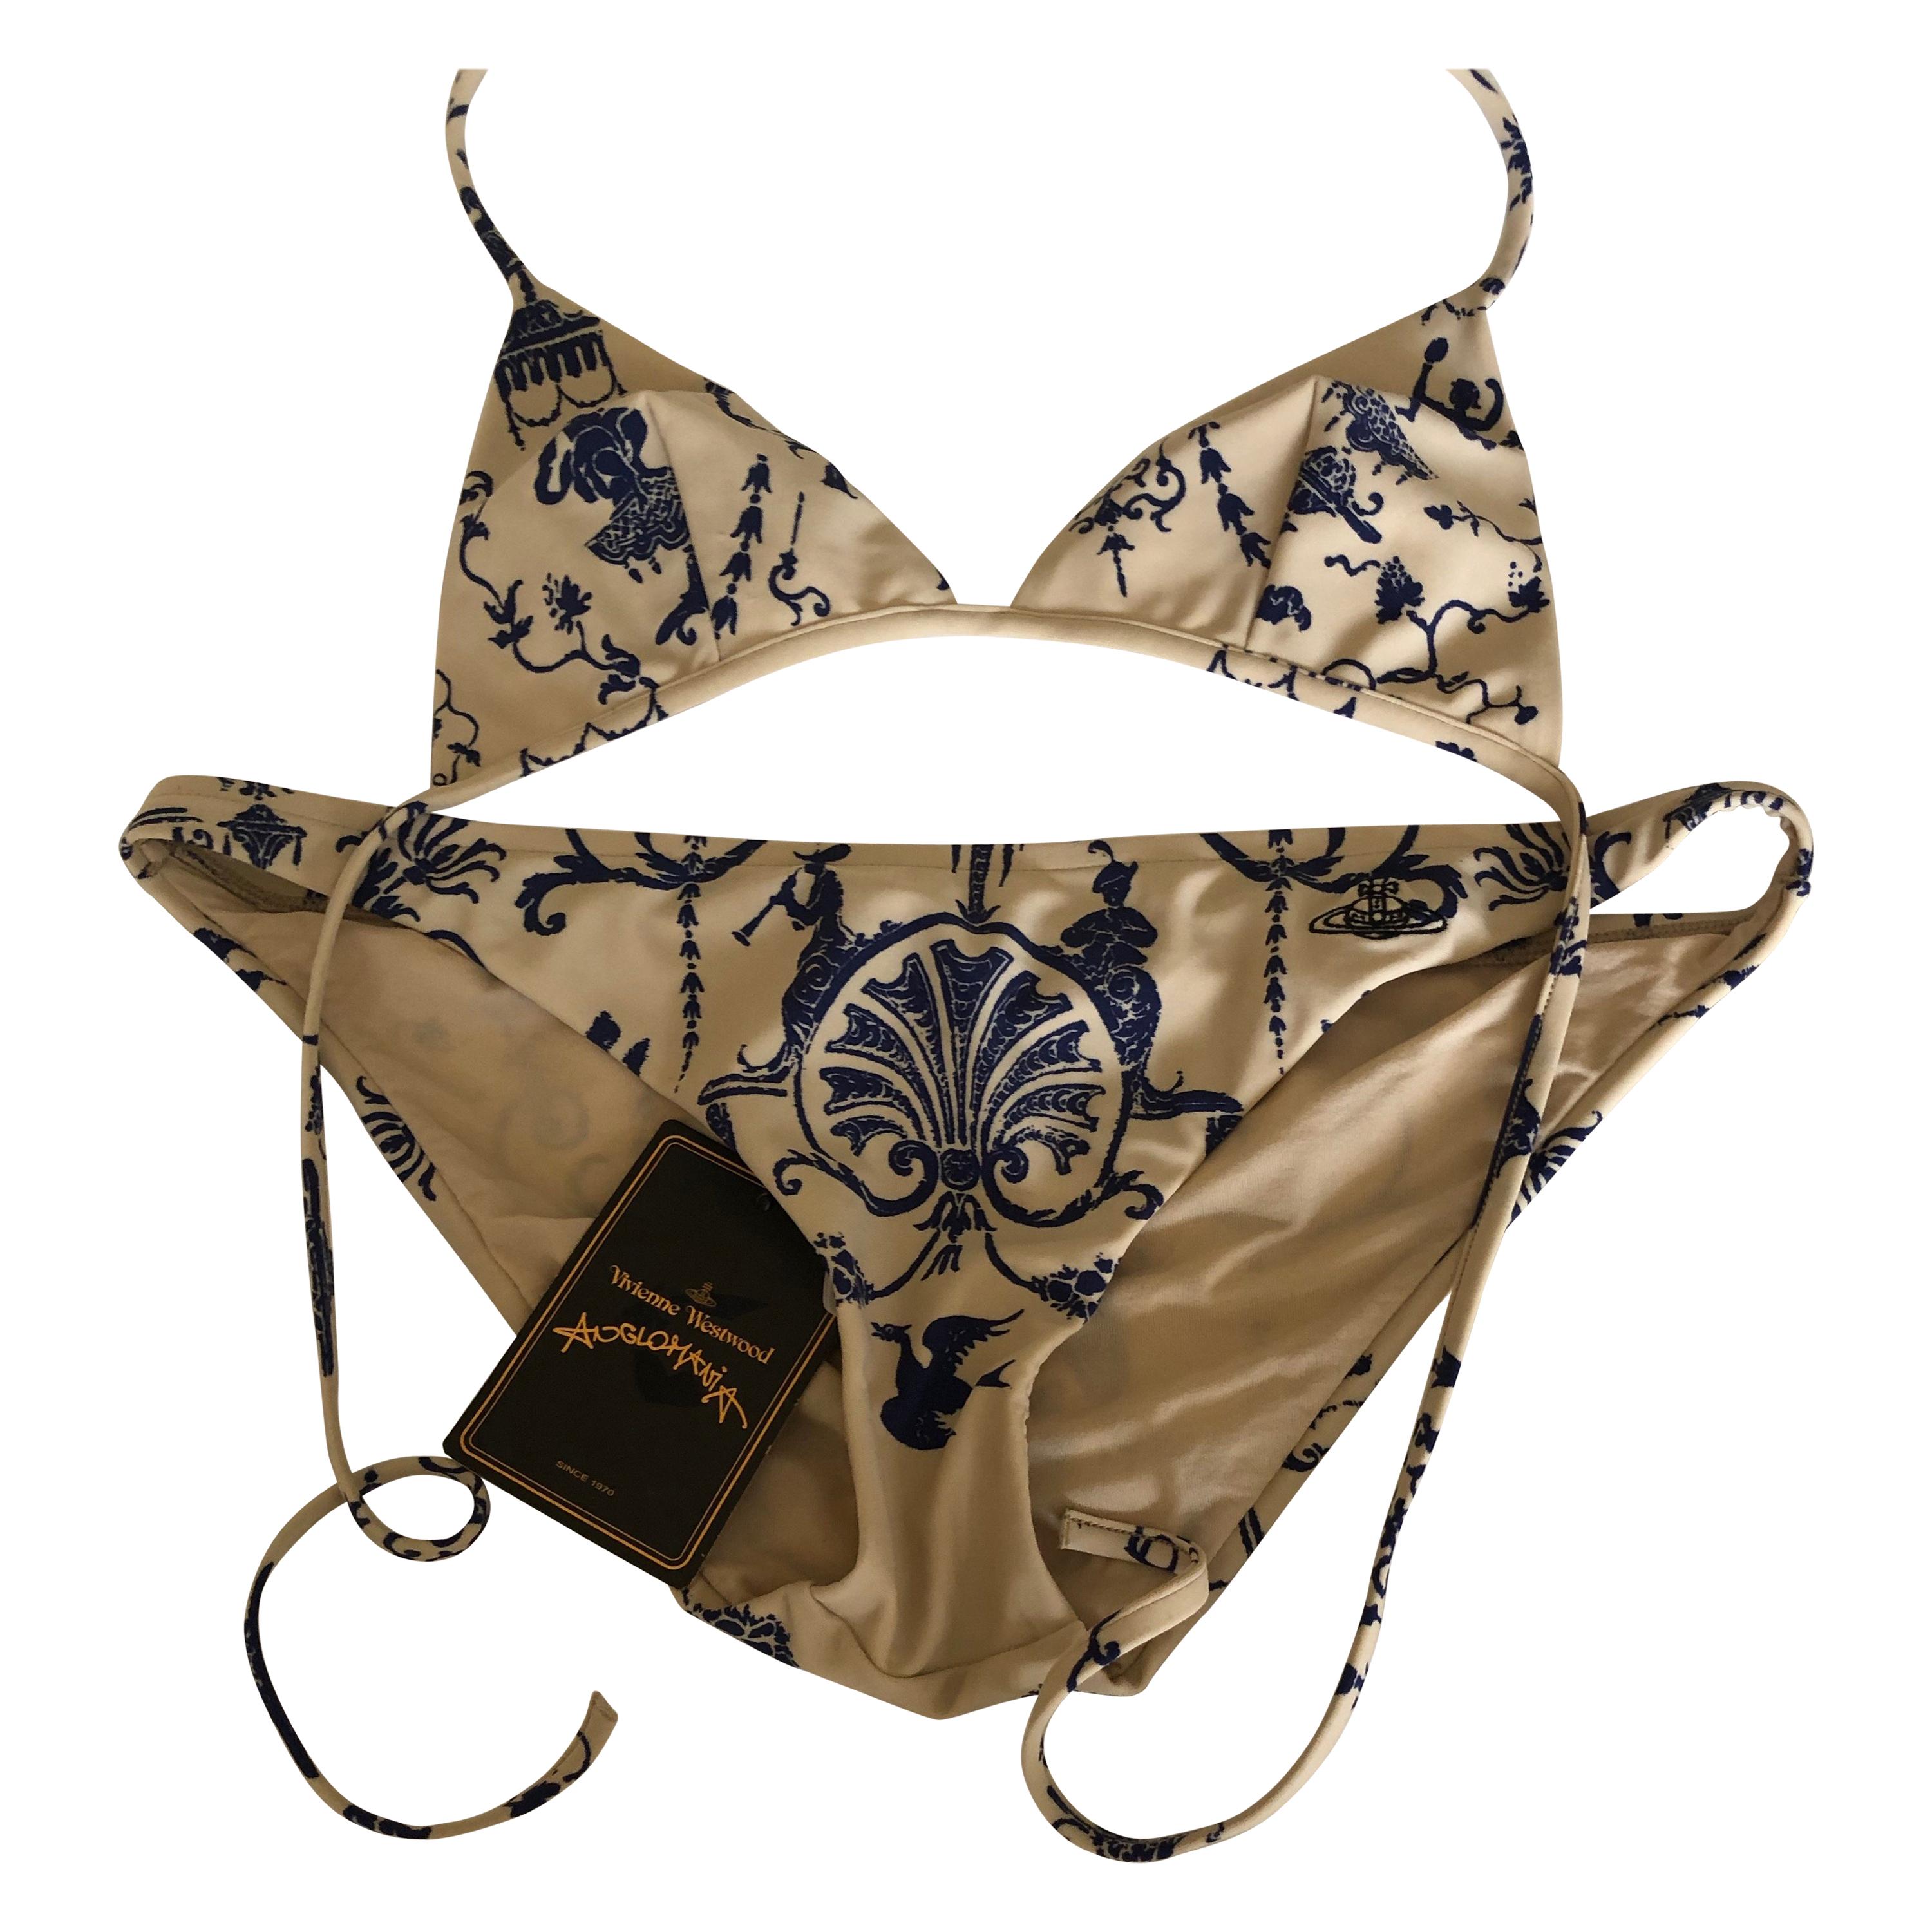 Vivienne Westwood Anglomania "Eve" Toile de Joie Bikini Swimsuit New w Tags For Sale